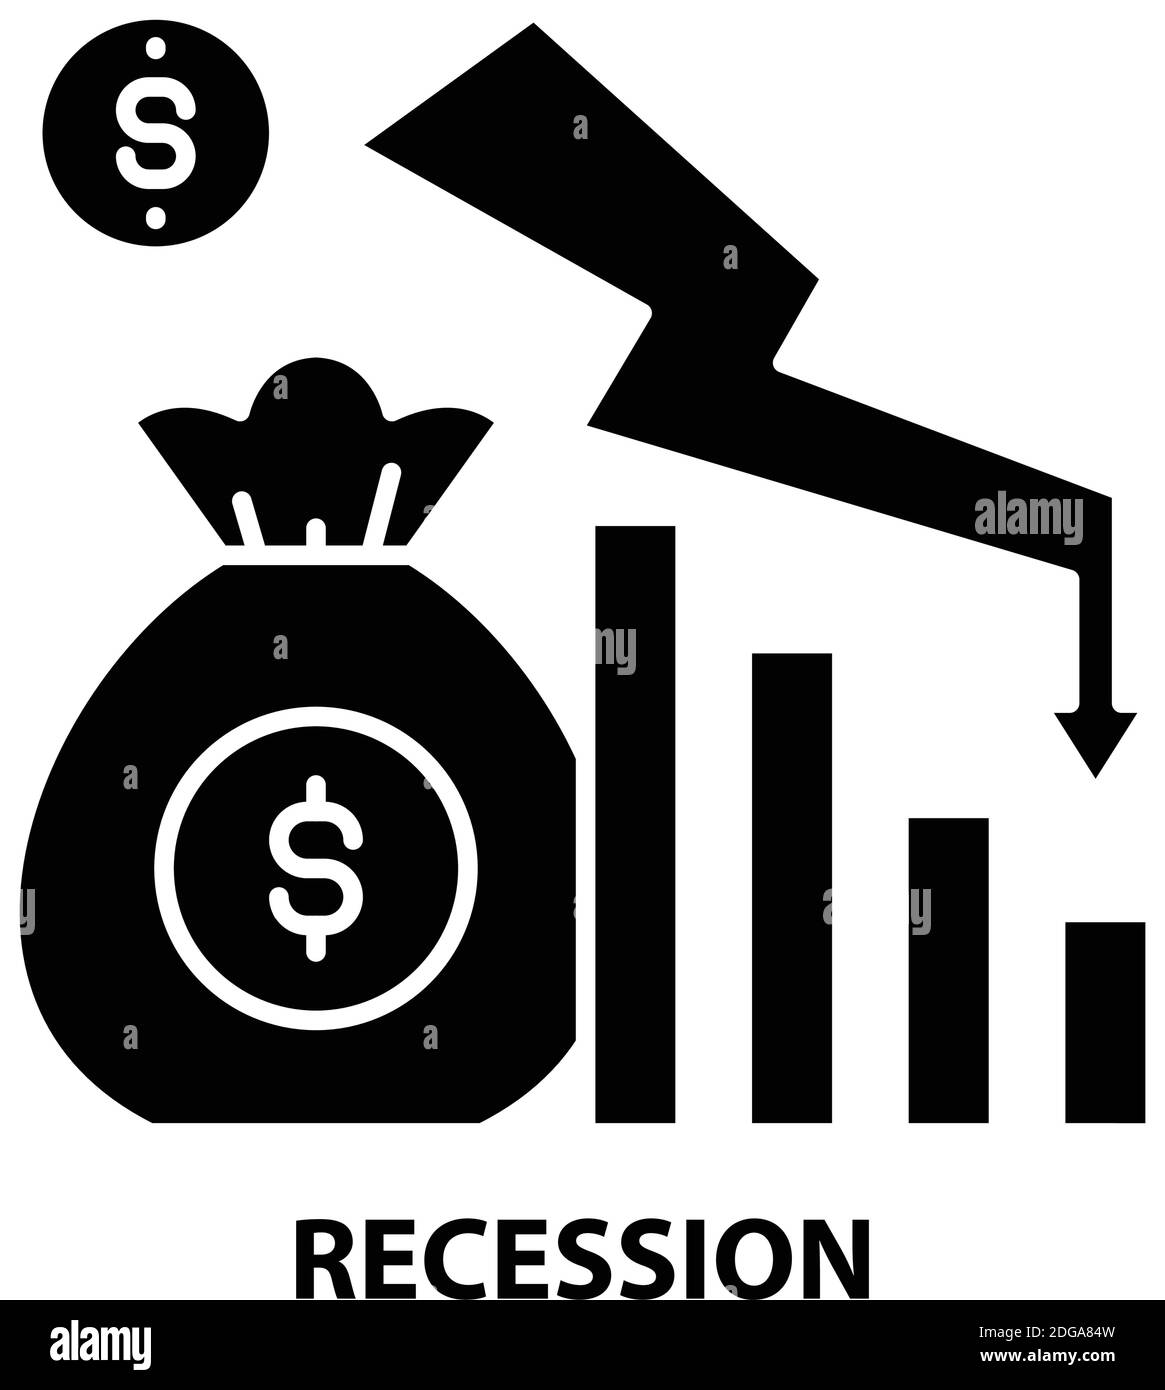 recession icon, black vector sign with editable strokes, concept illustration Stock Vector